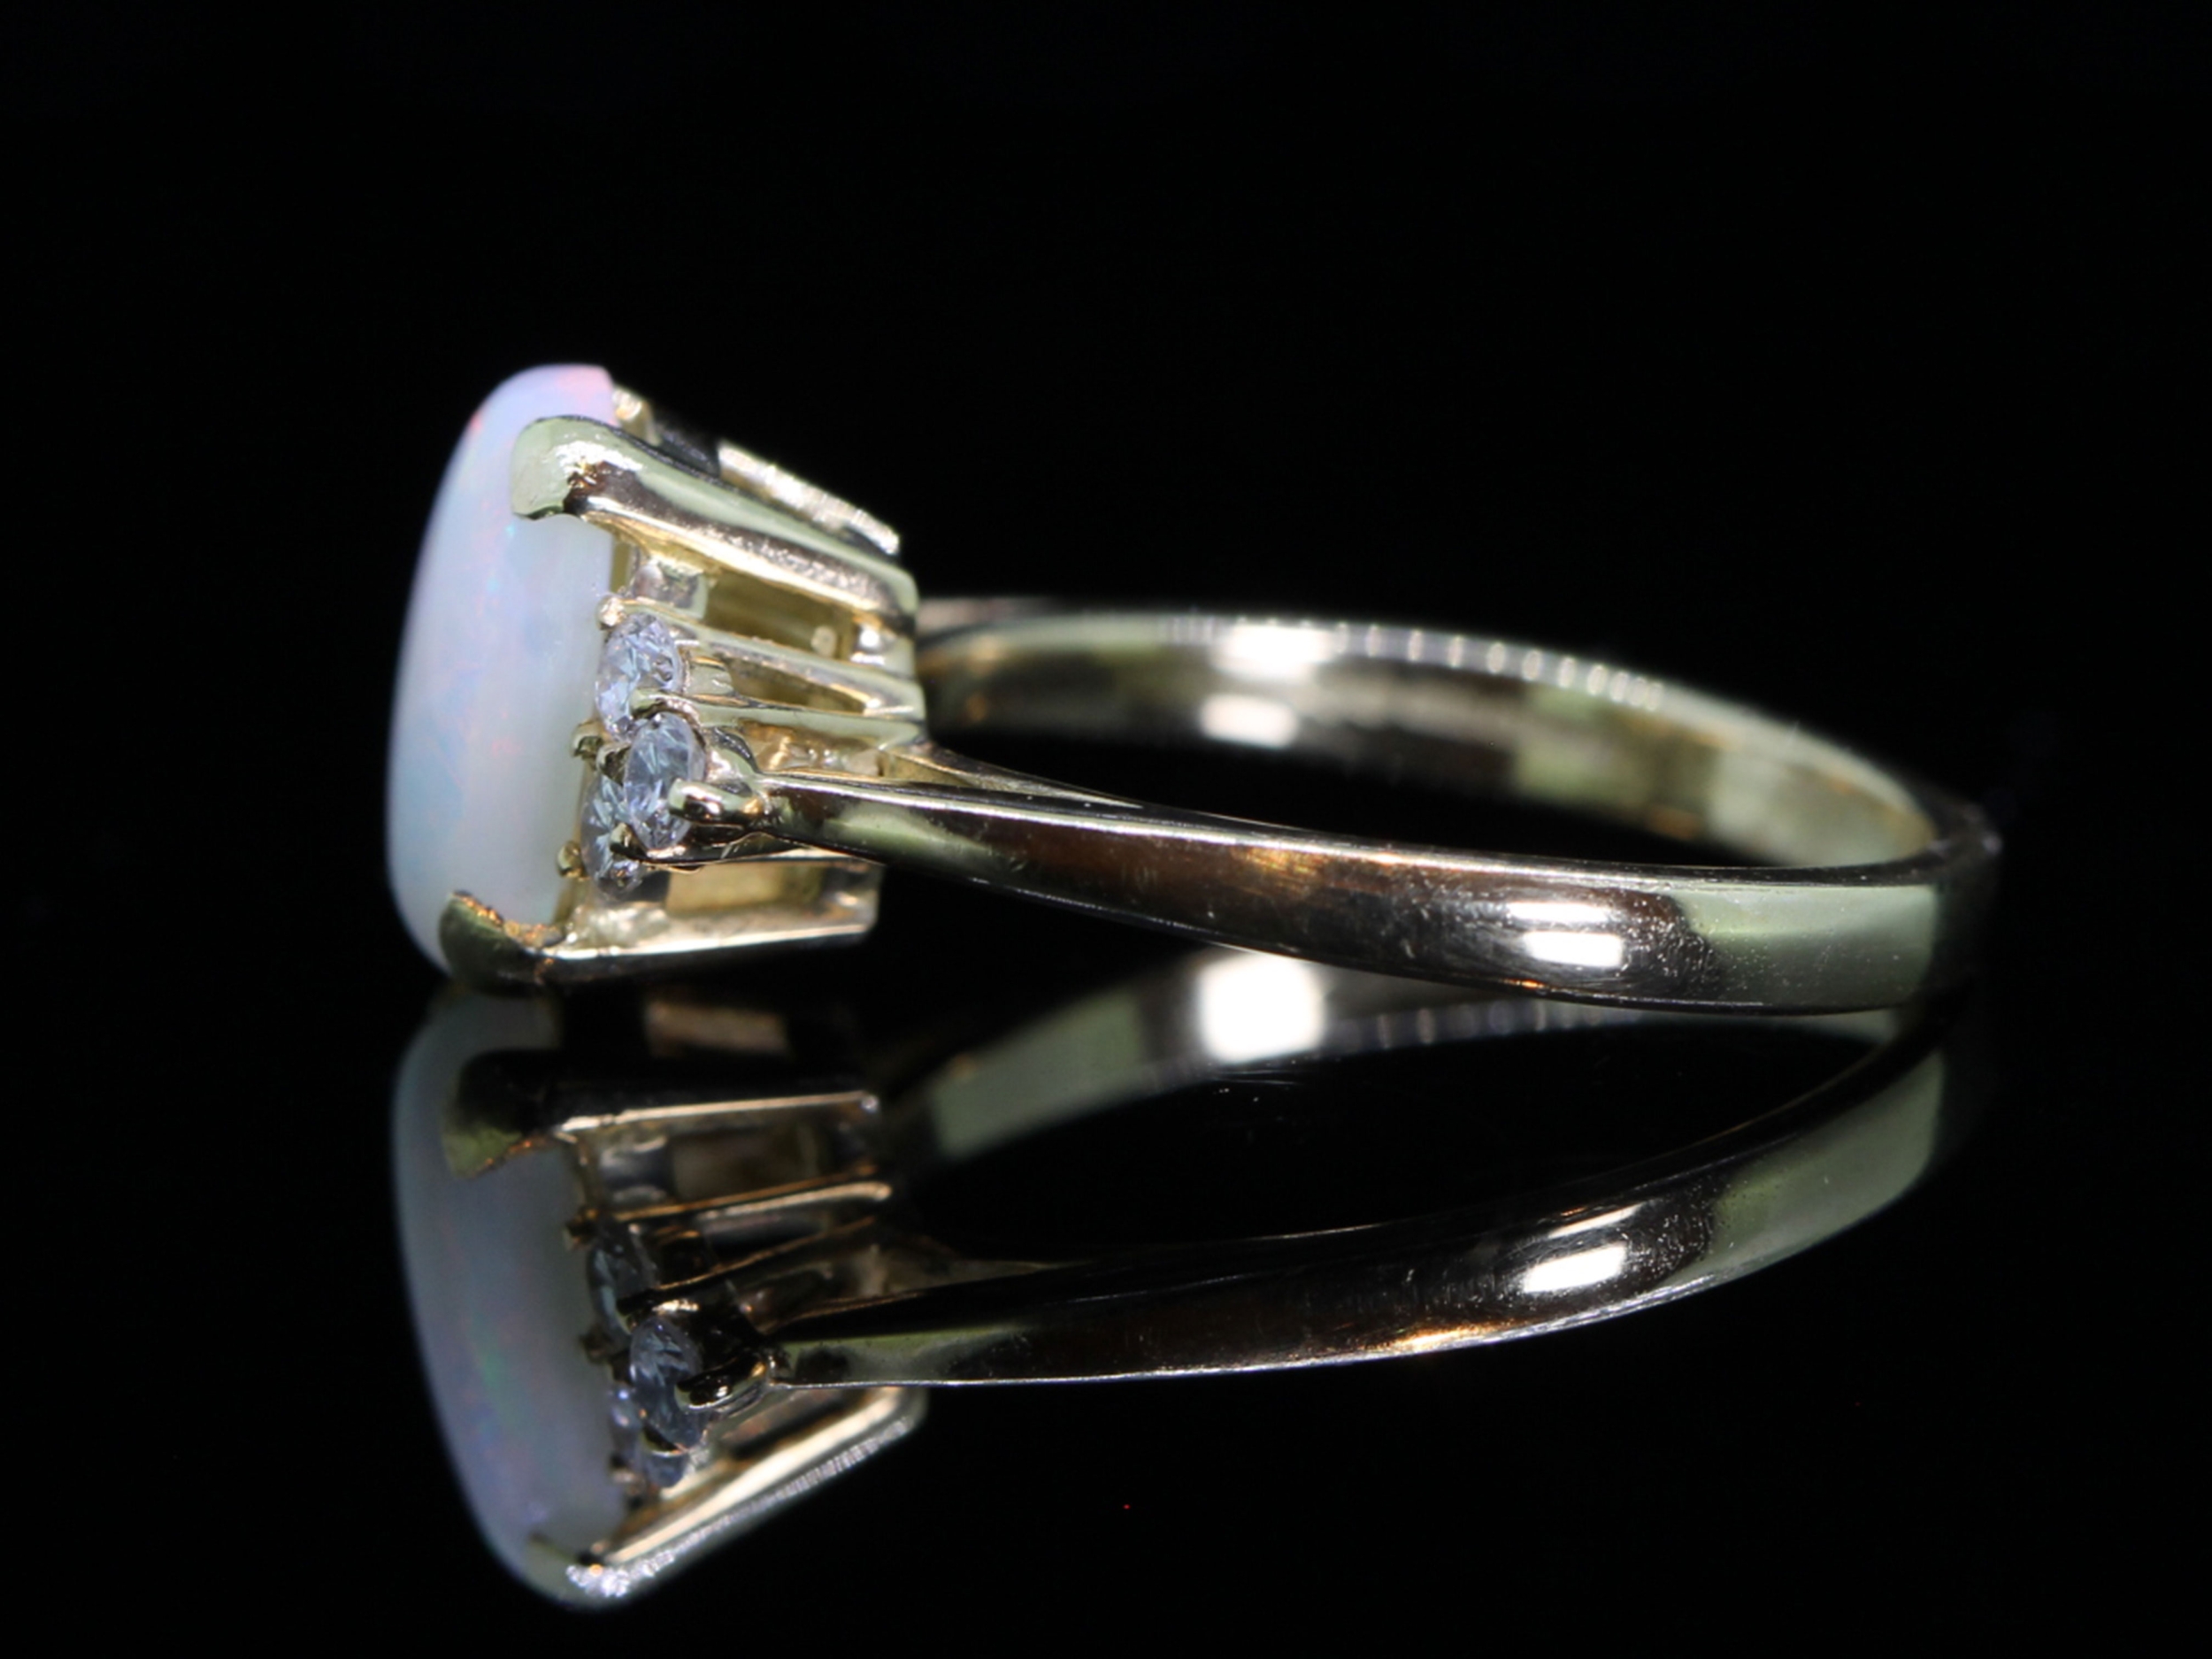 Impressive Opal and Diamond 18ct Ring